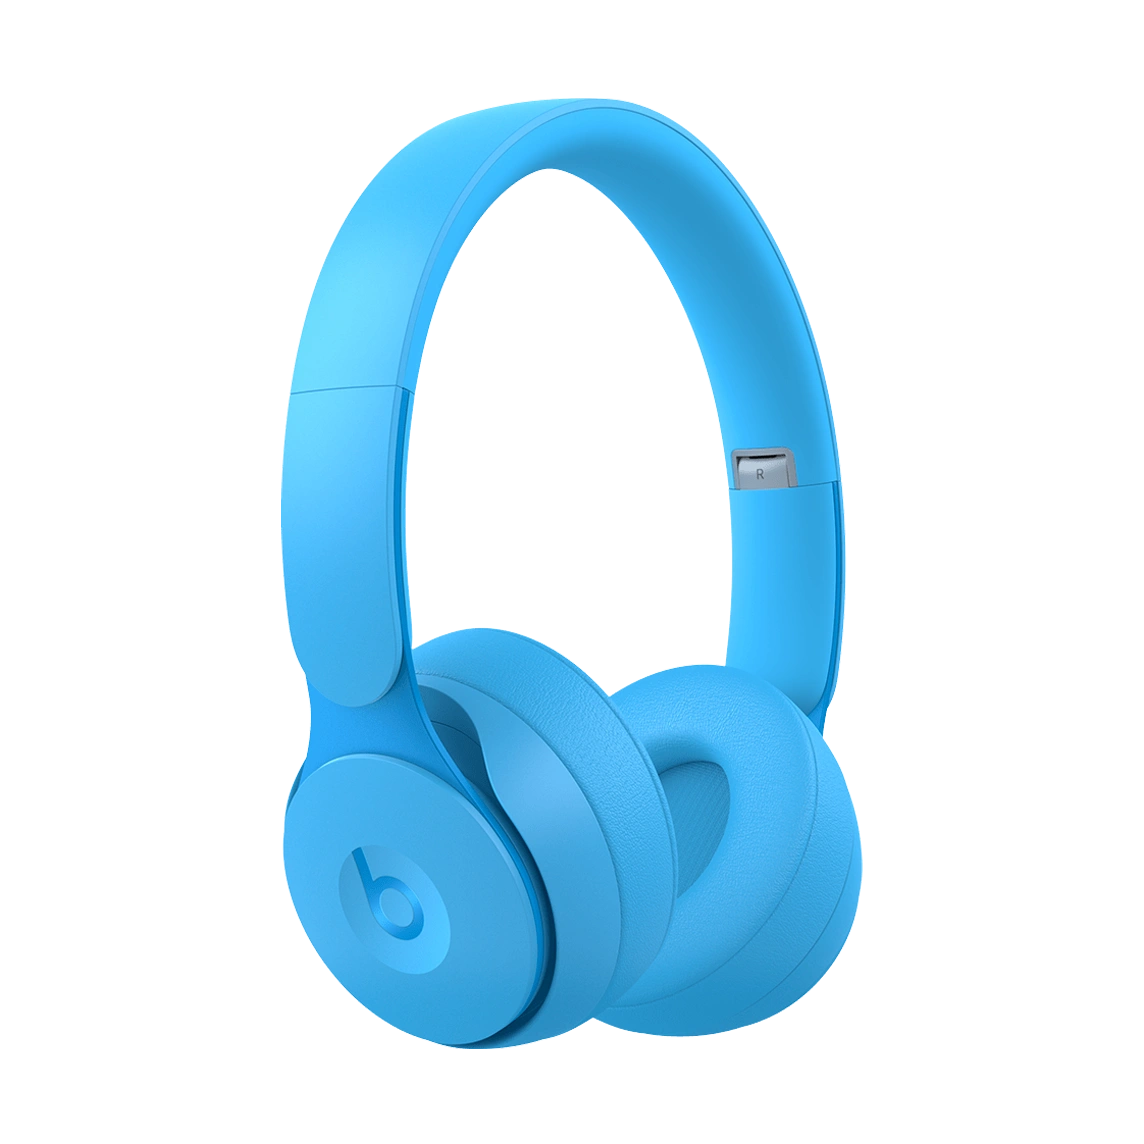 Beats Solo Pro Wireless Over Ear Headphones